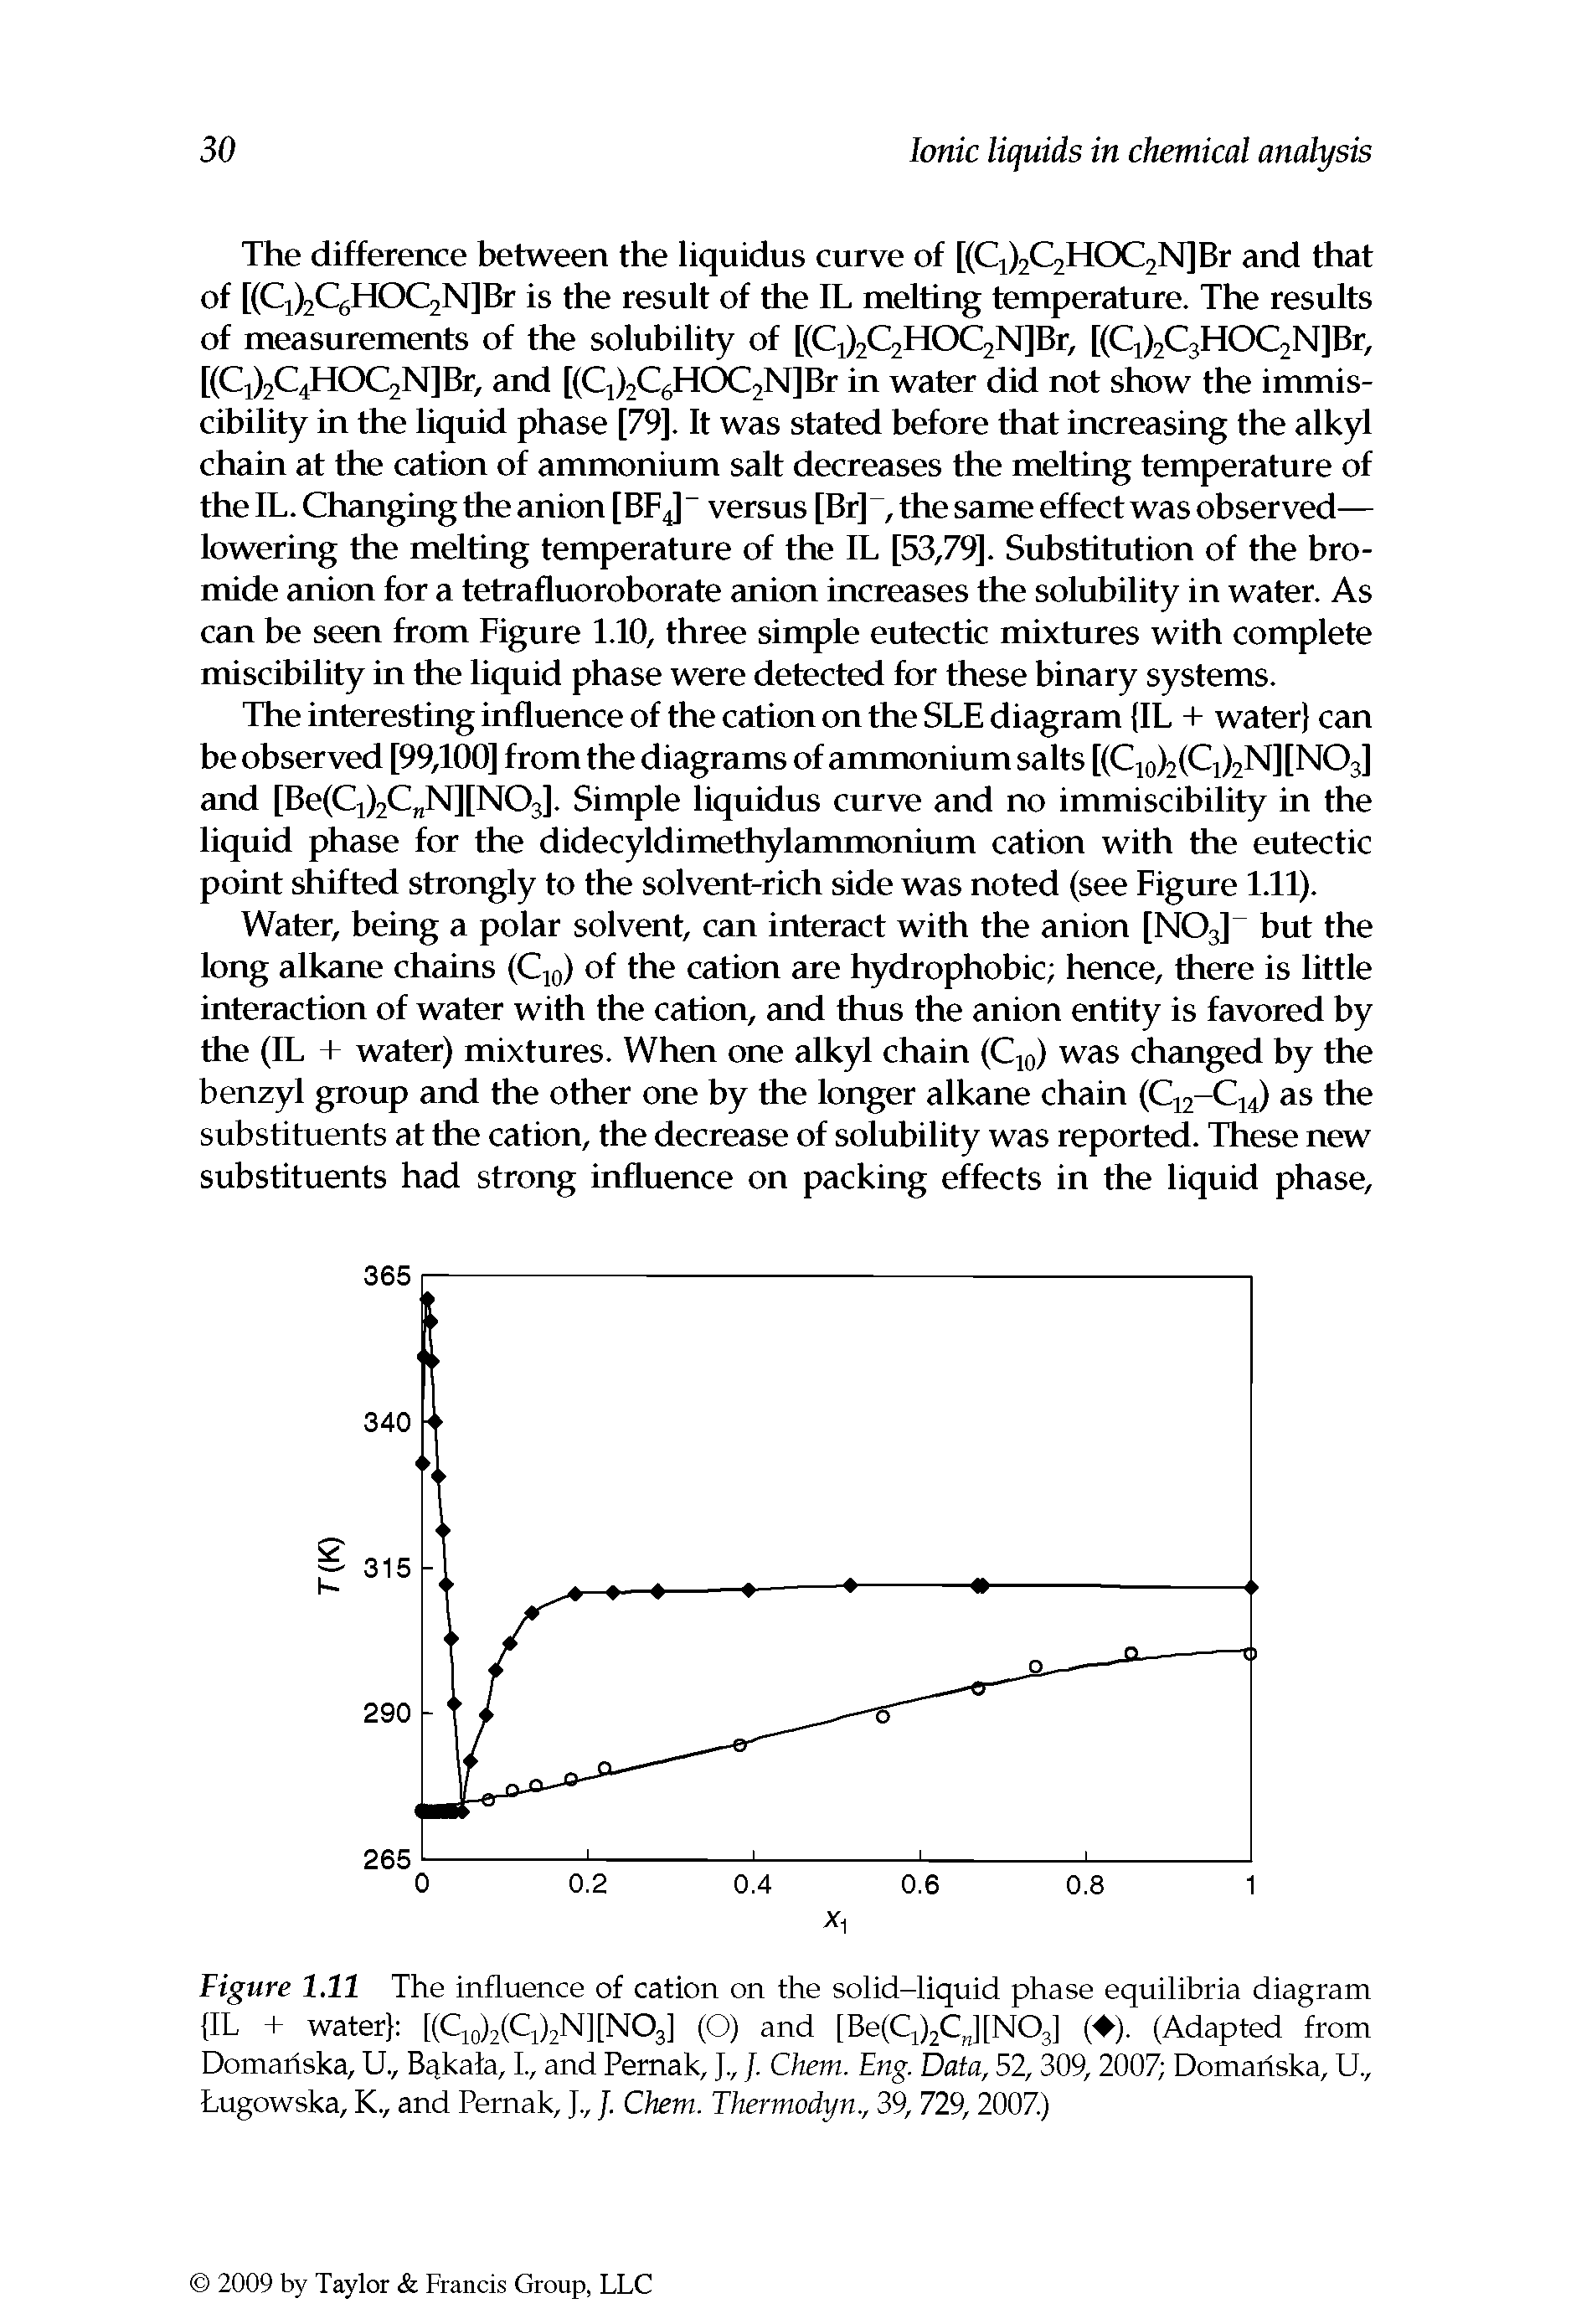 Figure 1.11 The influence of cation on the solid-liquid phase equilibria diagram (IL + water [(Cj )2(Cj)2N][N03j (O) and [Be(Cj)2CJ[N03] ( ). (Adapted from Domahska, U., B kala, L, and Pernak, J. Chem. Eng. Data, 52, 309, 2007 Domahska, U., Lugowska, K., and Pernak, J., /. Chem. Thermodyn., 39, 729,2007.)...